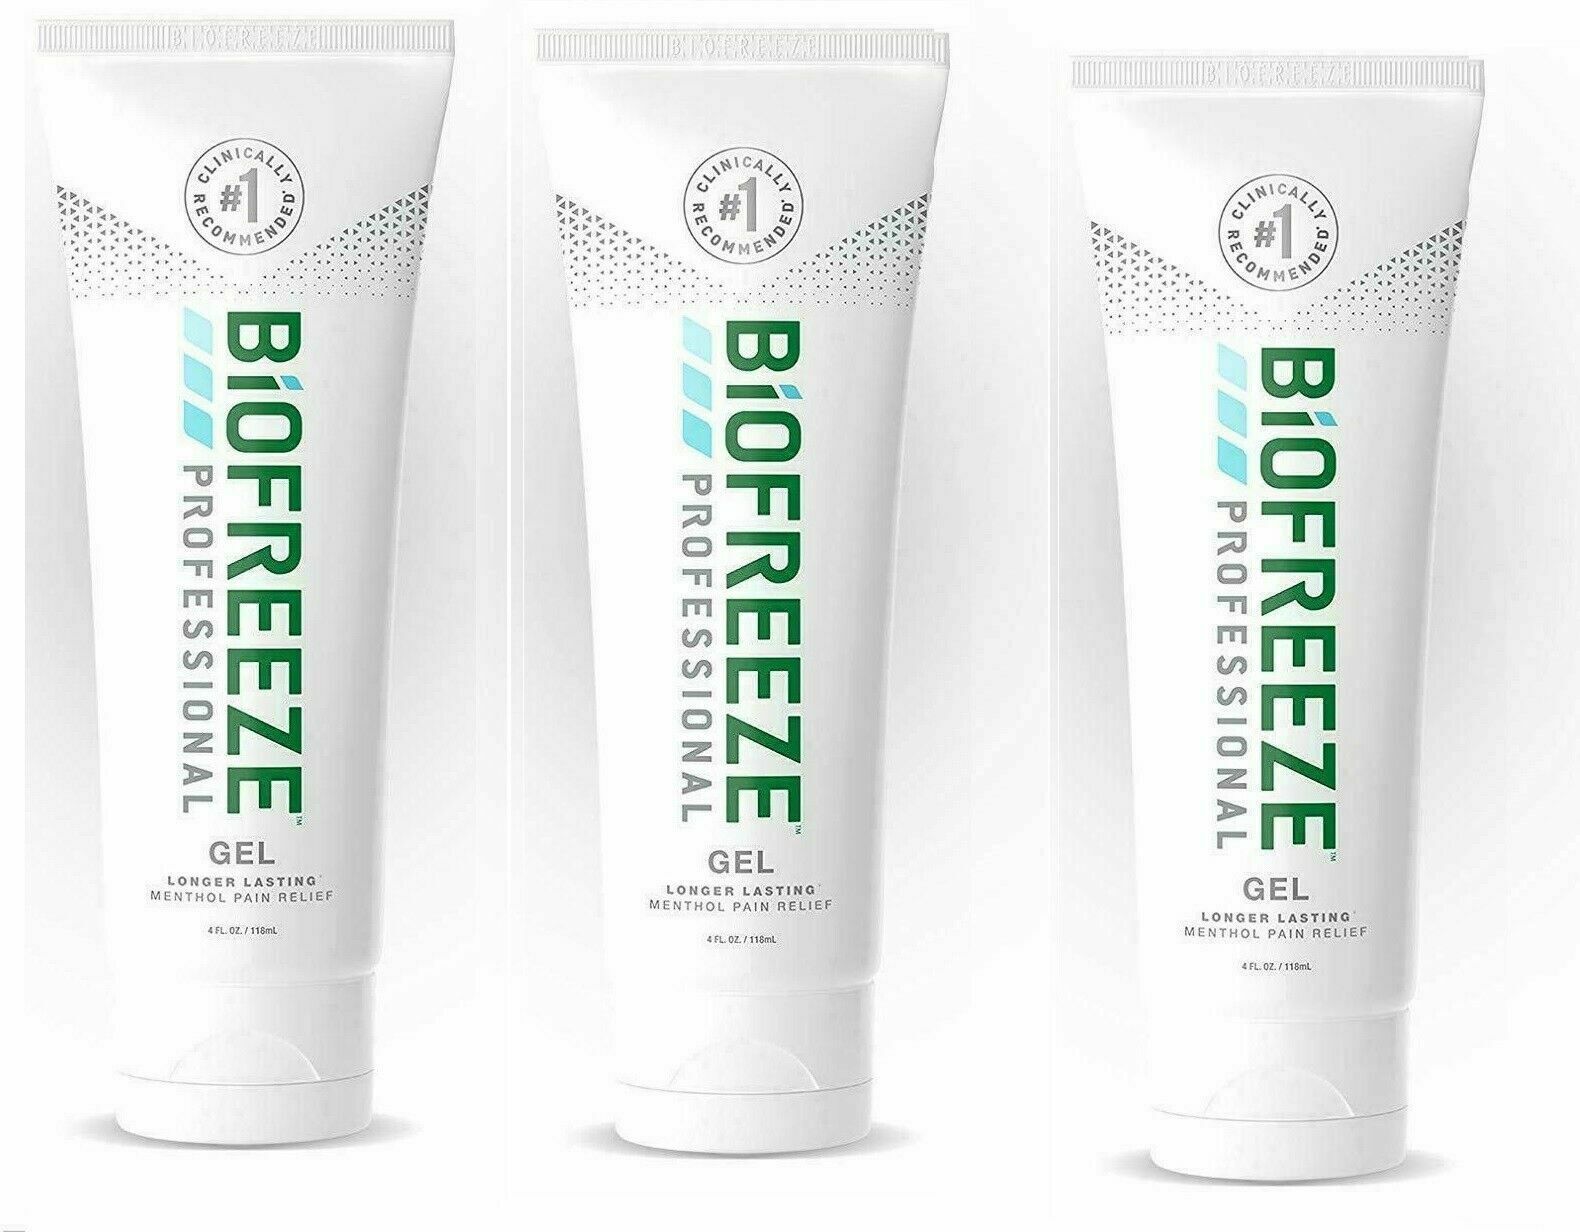 NEW Biofreeze Professional Gel 4 Oz Tube - Pack of 3 Green